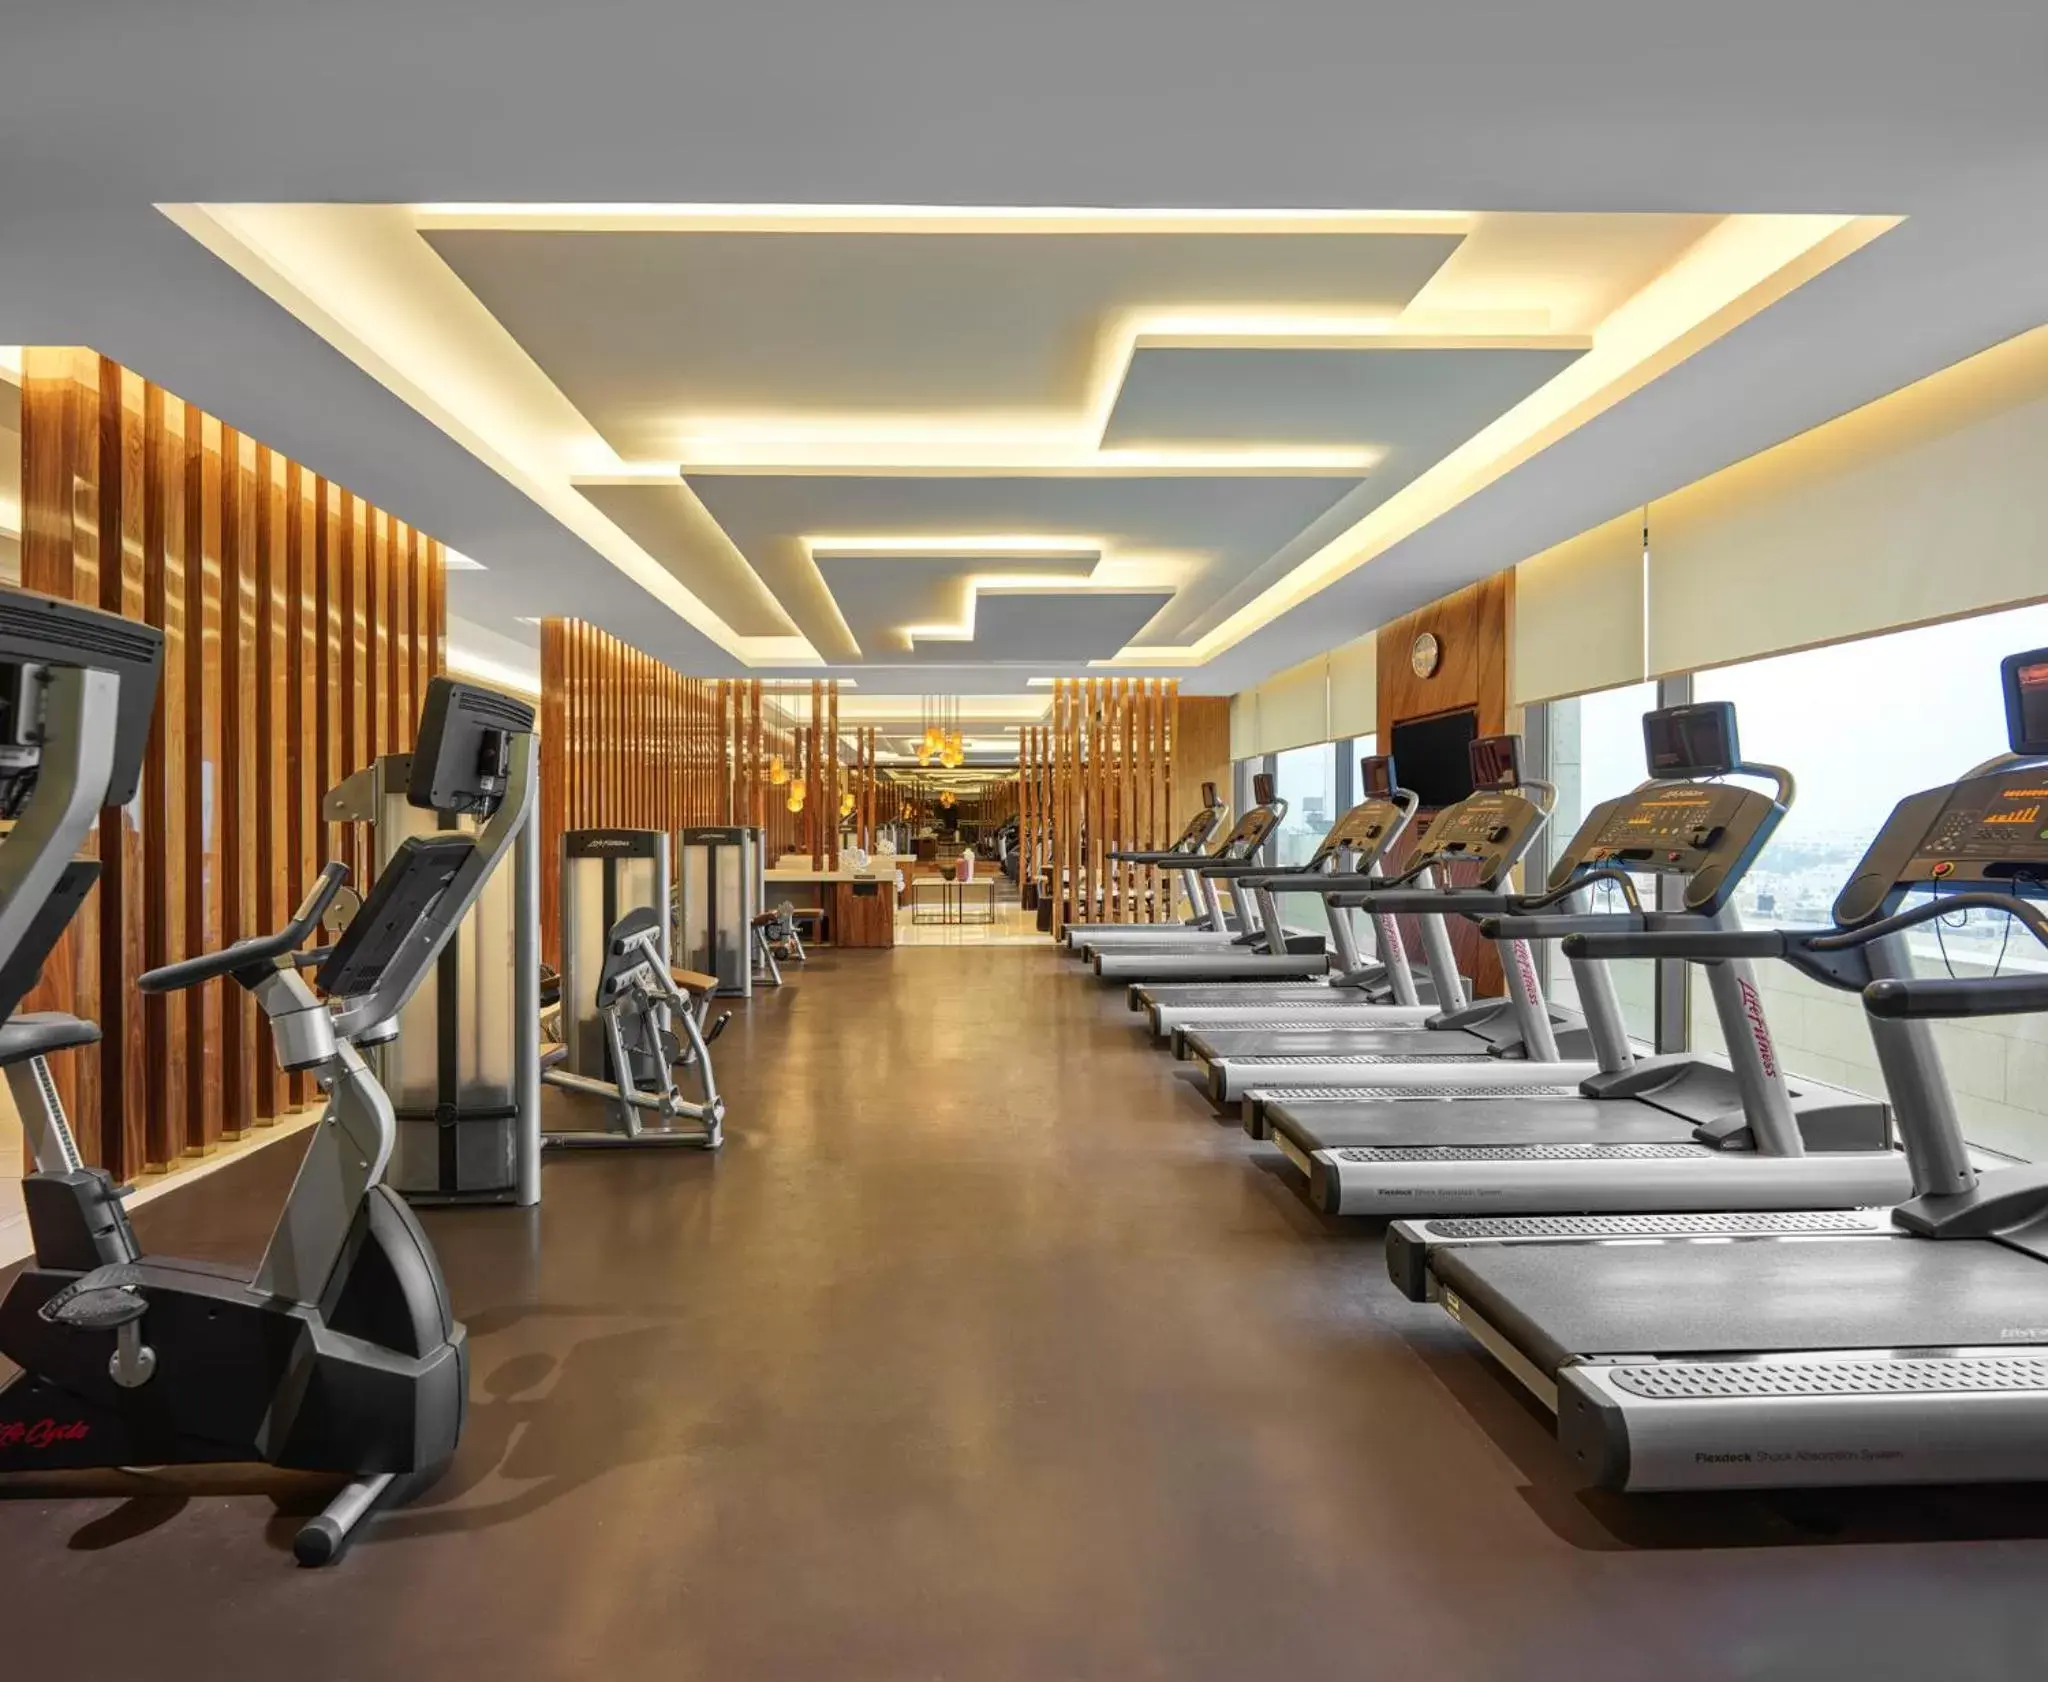 Fitness centre/facilities, Fitness Center/Facilities in Fairmont Amman